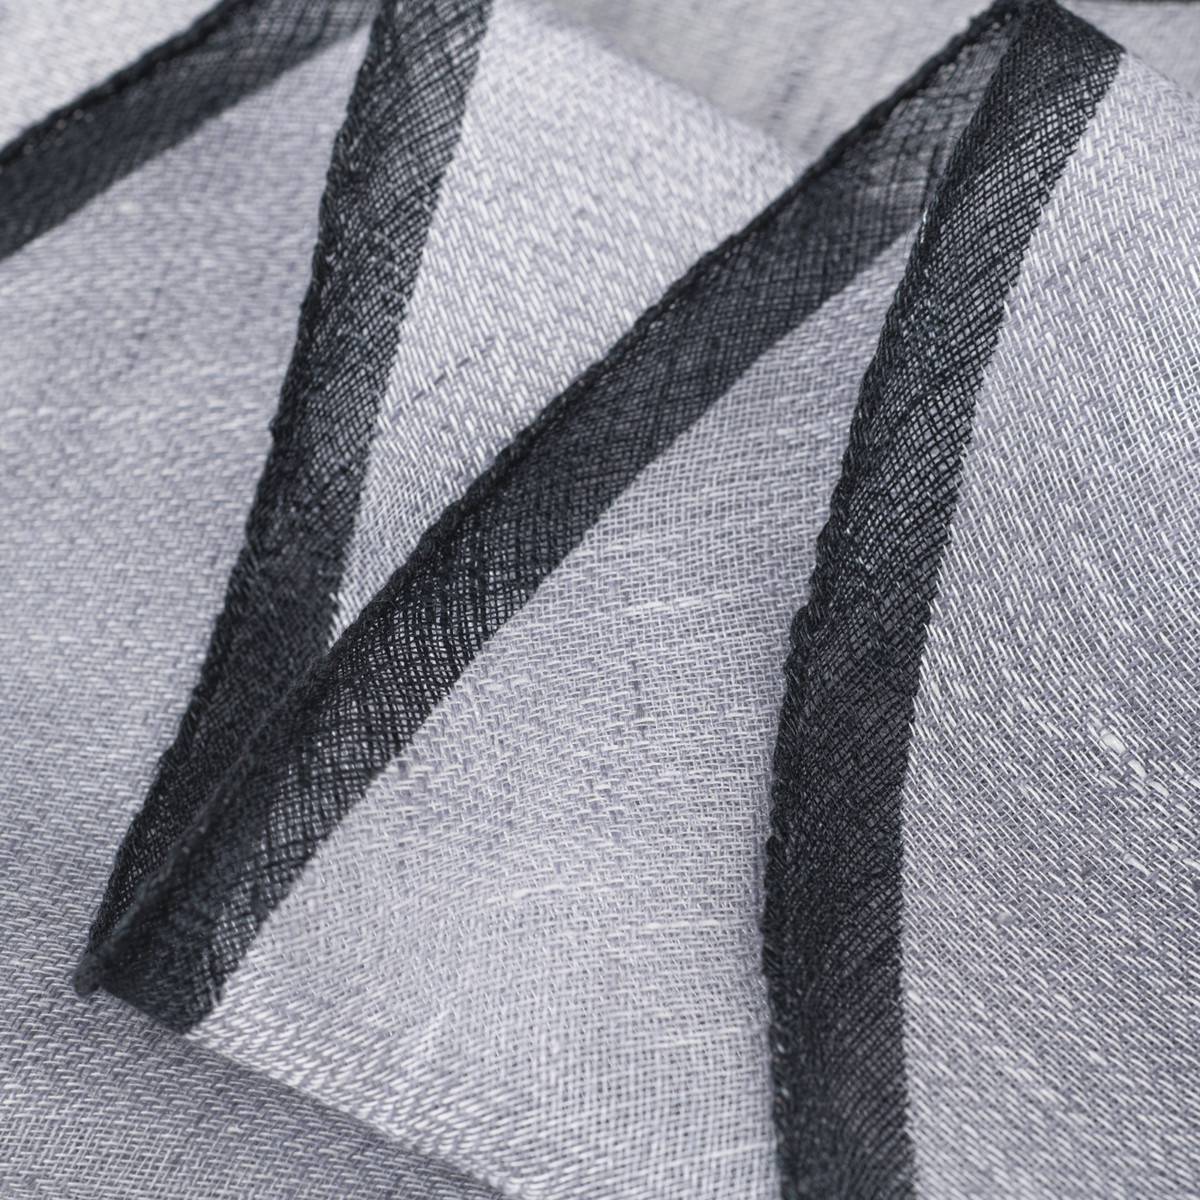 Rhombus Linen Scarf for women 100% Capri light grey and dark grey linen scarf detail